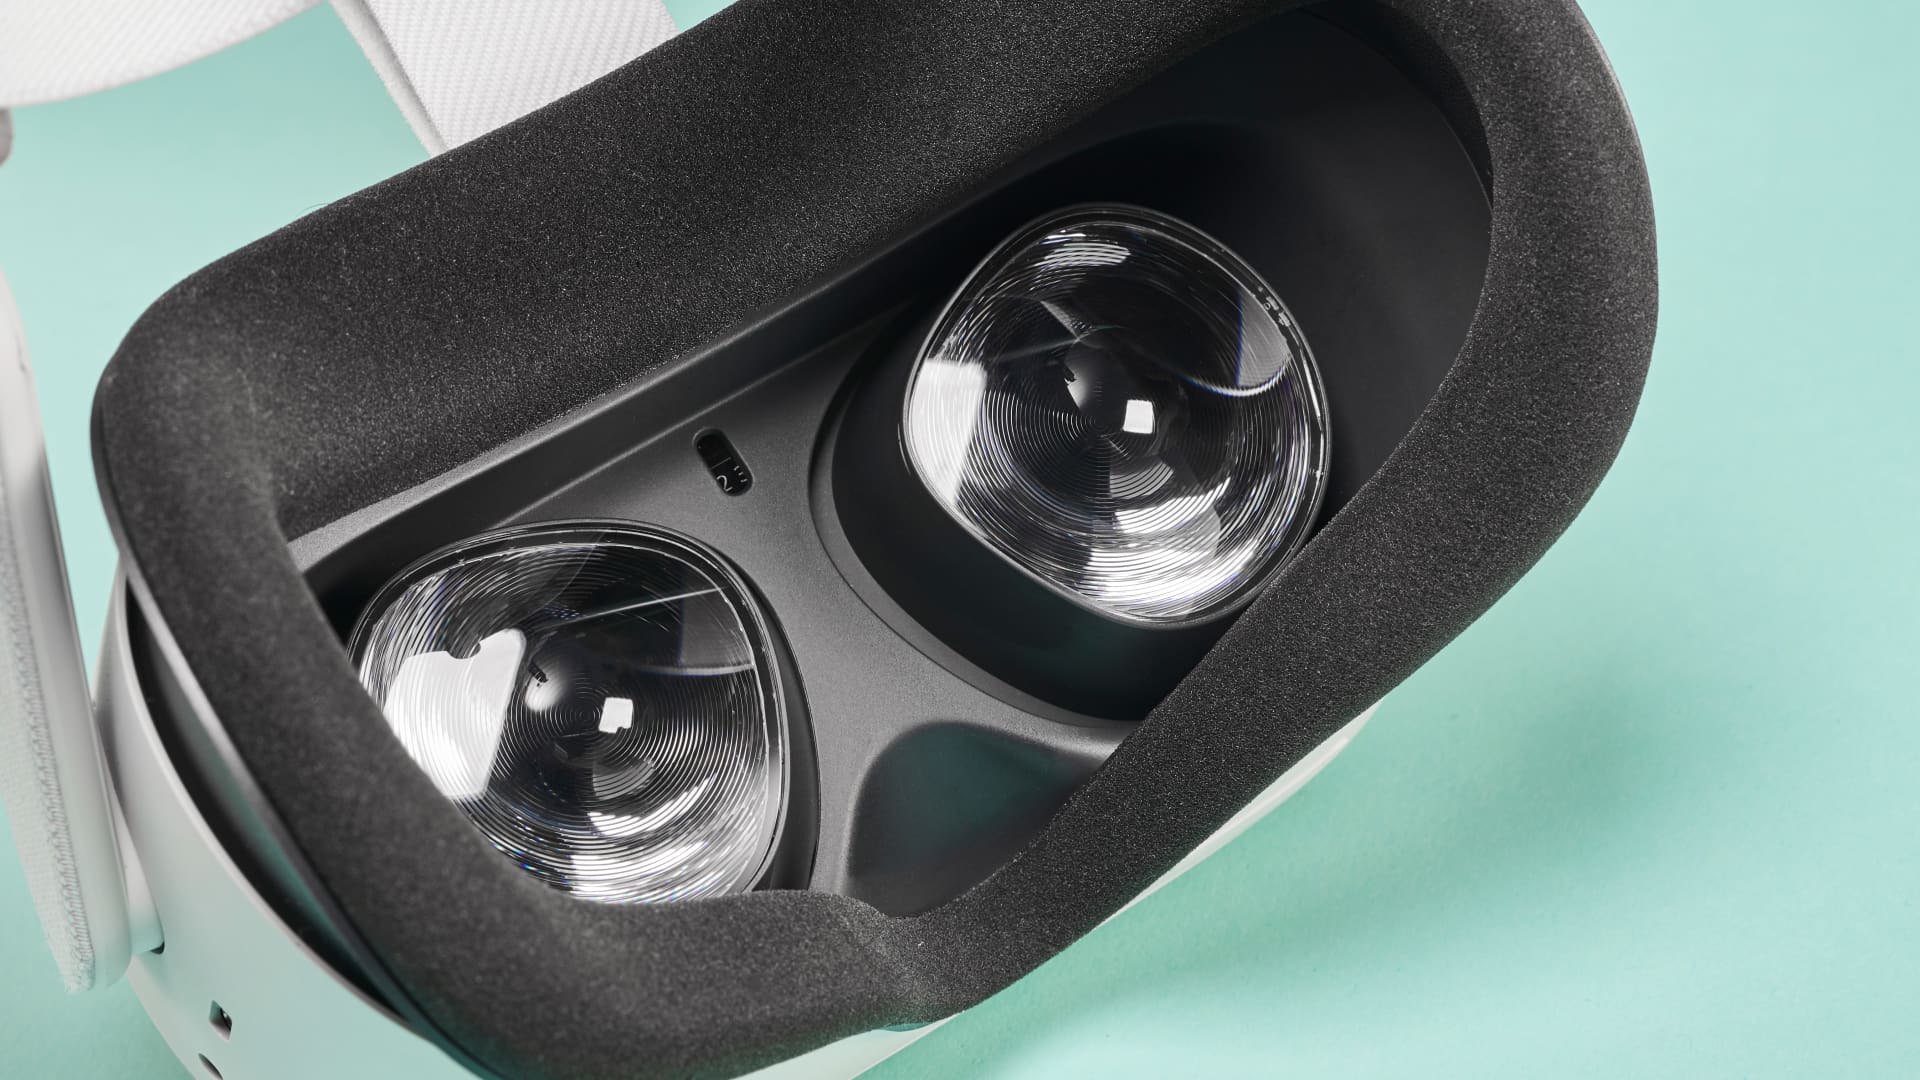 Meta's Oculus Quest 2 virtual reality headset.